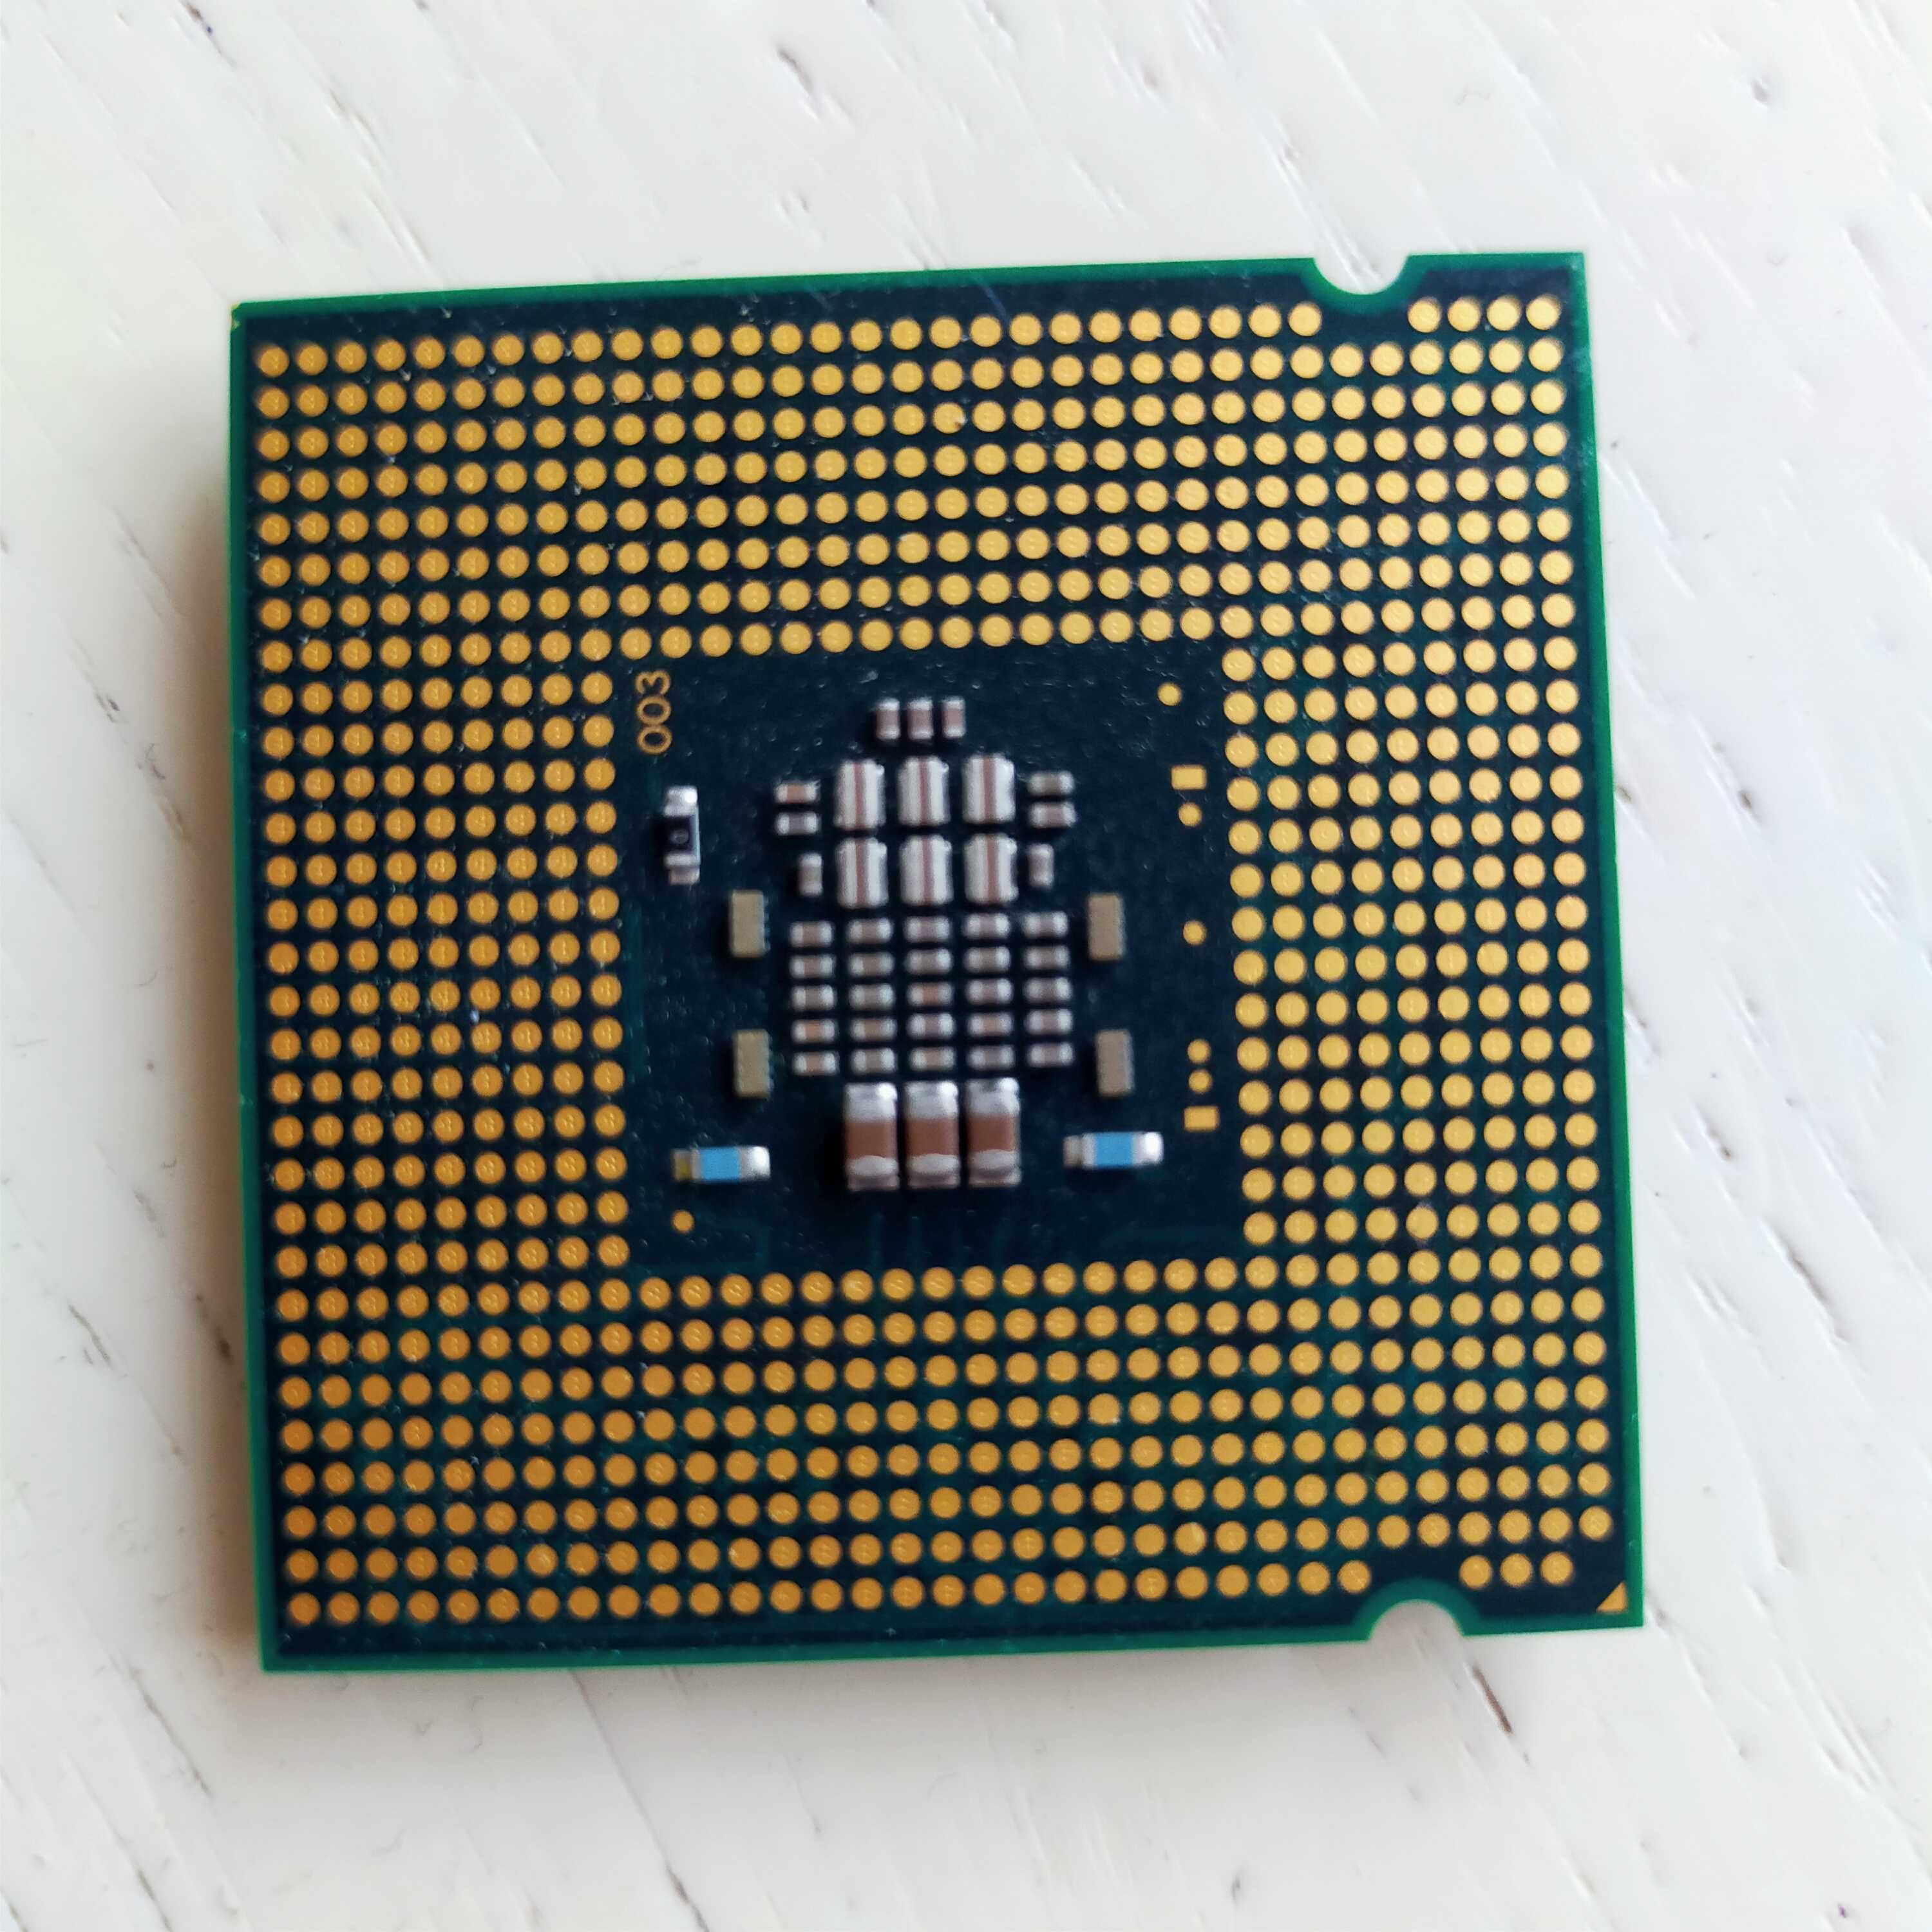 Intel® Pentium® Processor E2160
1M Cache, 1.80 GHz, 800 MHz